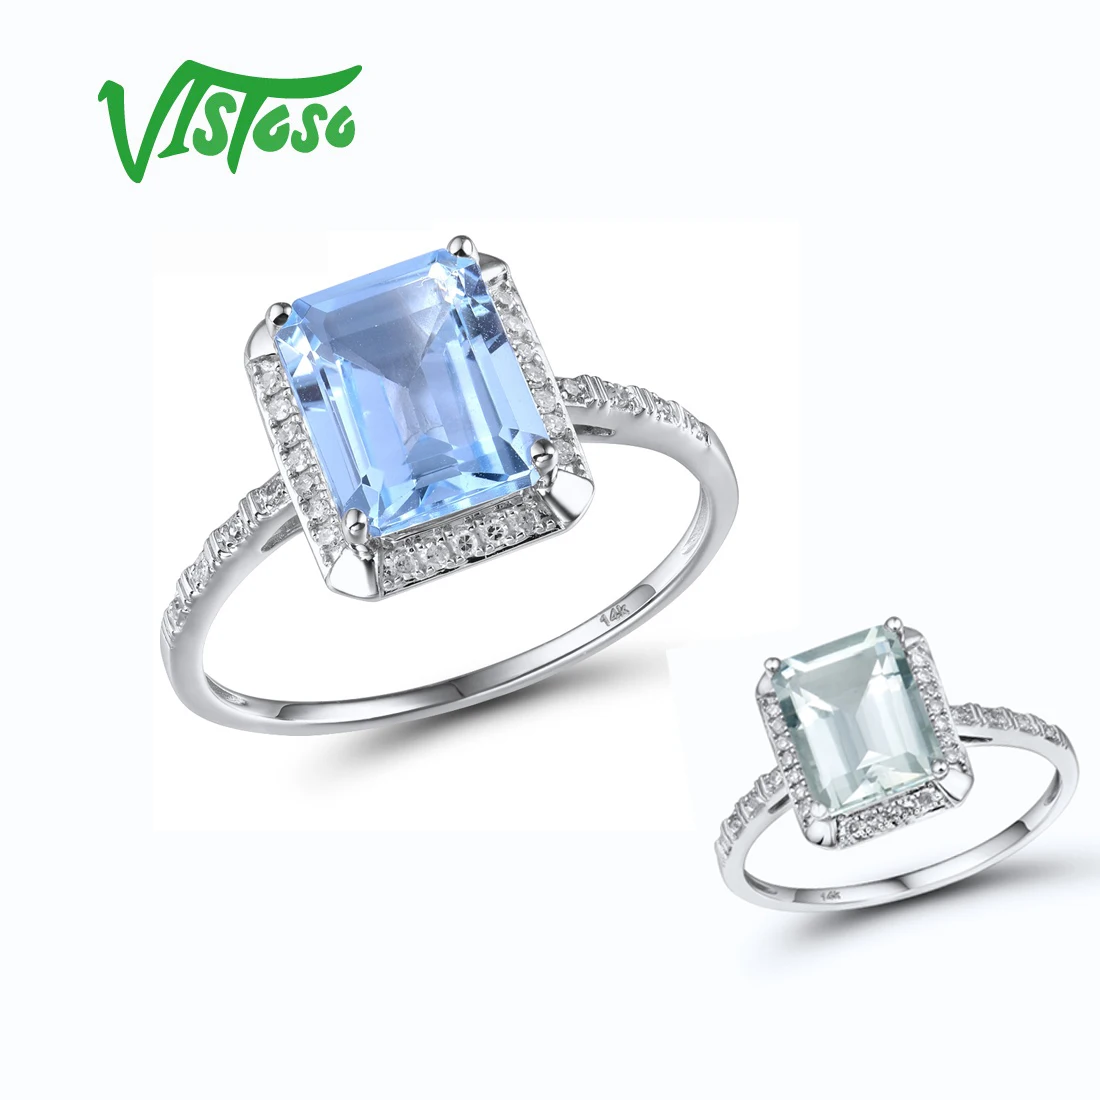 VISTOSO JEWELRY Genuine Diamond Band Ring 14K 585  White Gold R316376DIA14KW